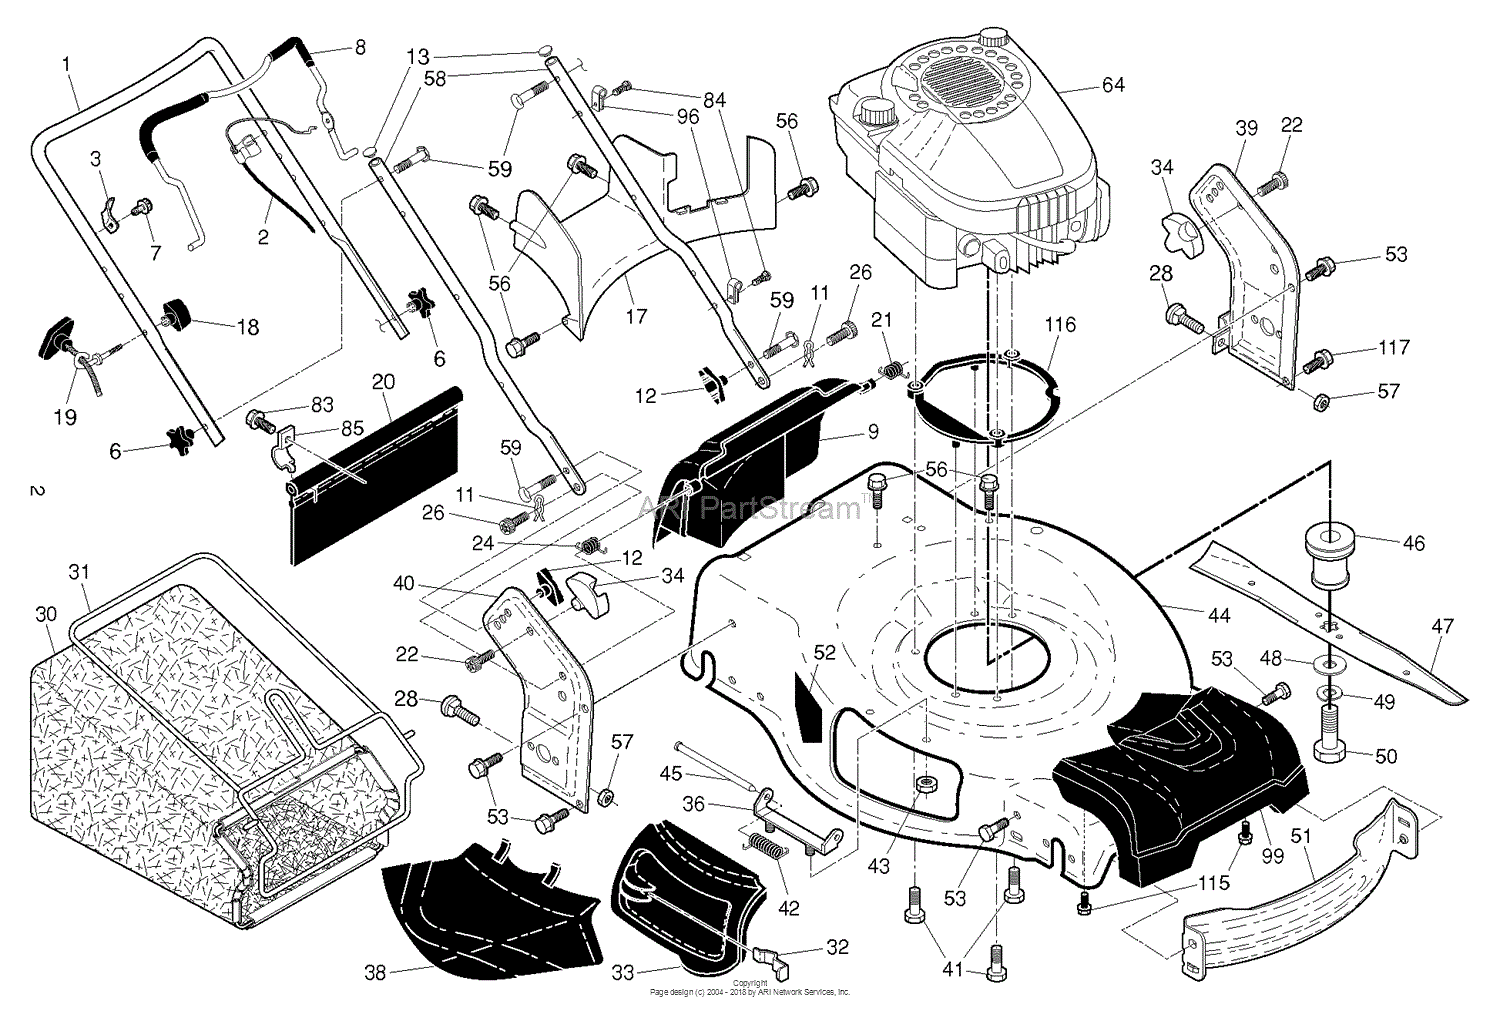 Husqvarna HU725AWD - 96145001702 (2014-04) Parts Diagrams